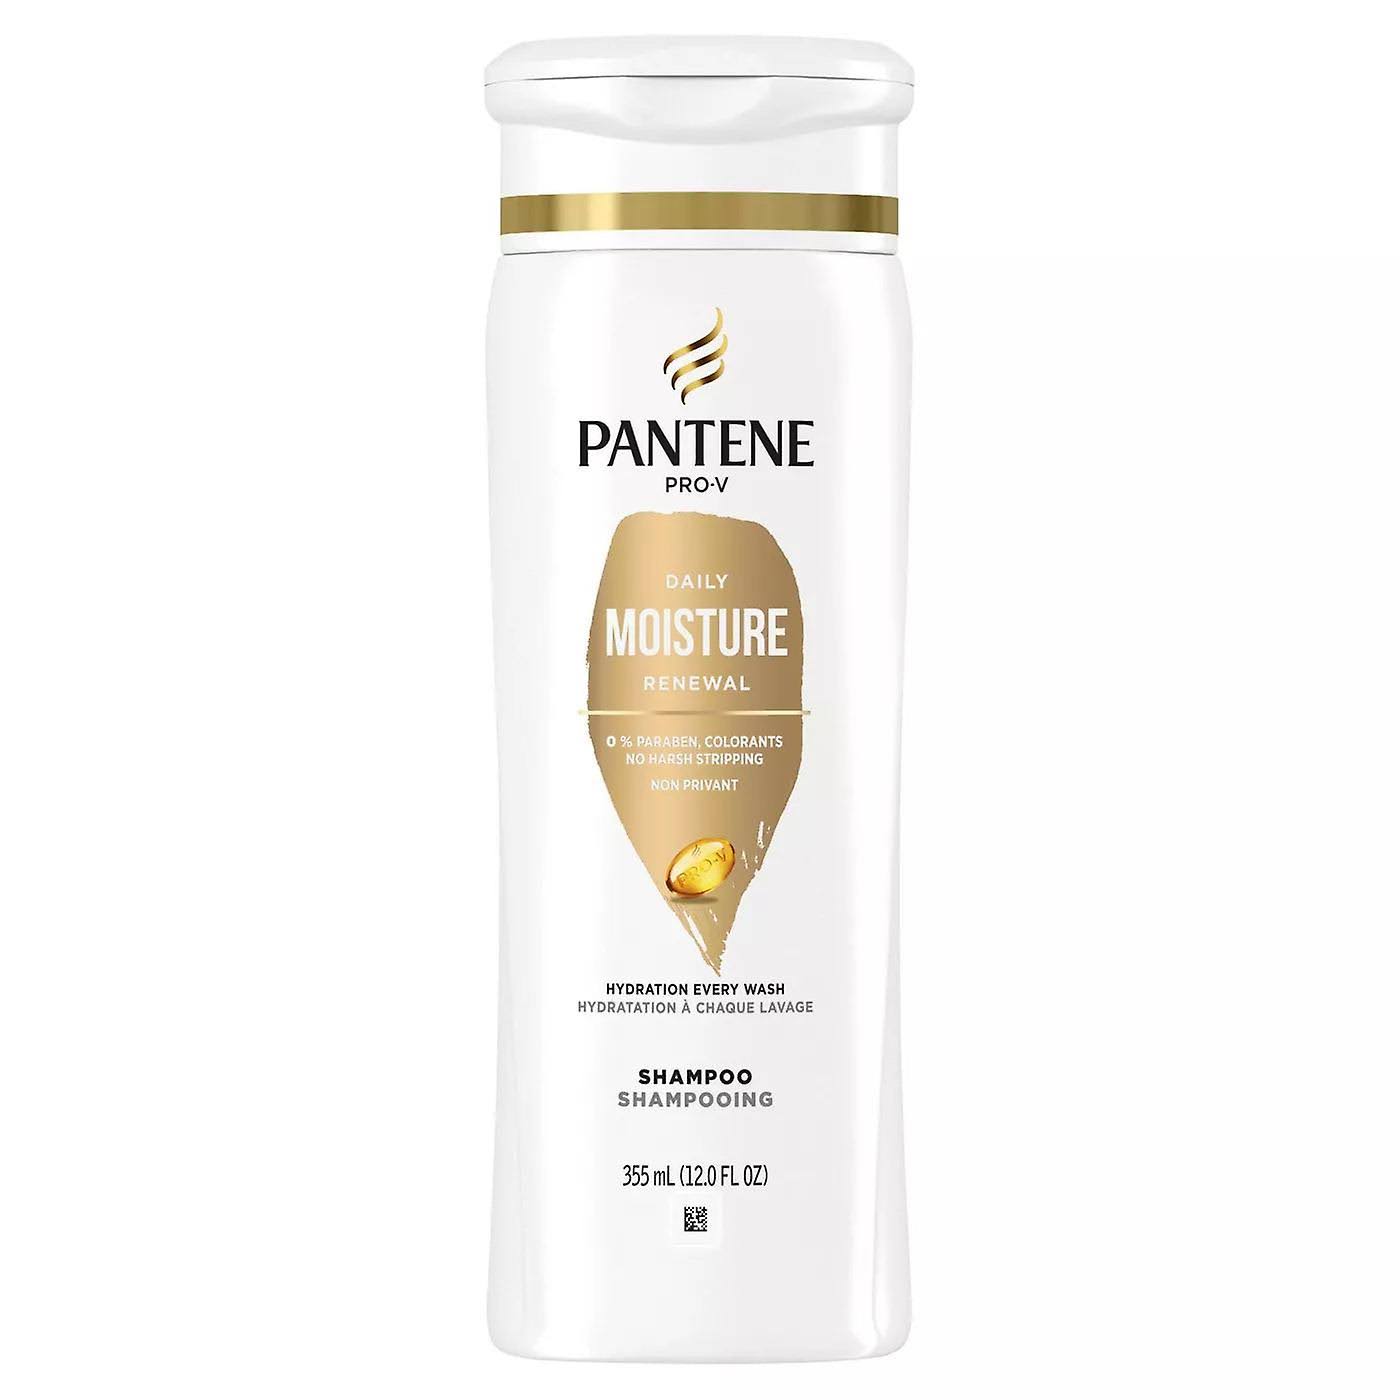 Pantene Pro-V Daily Moisture Renewal Shampoo, 12 oz